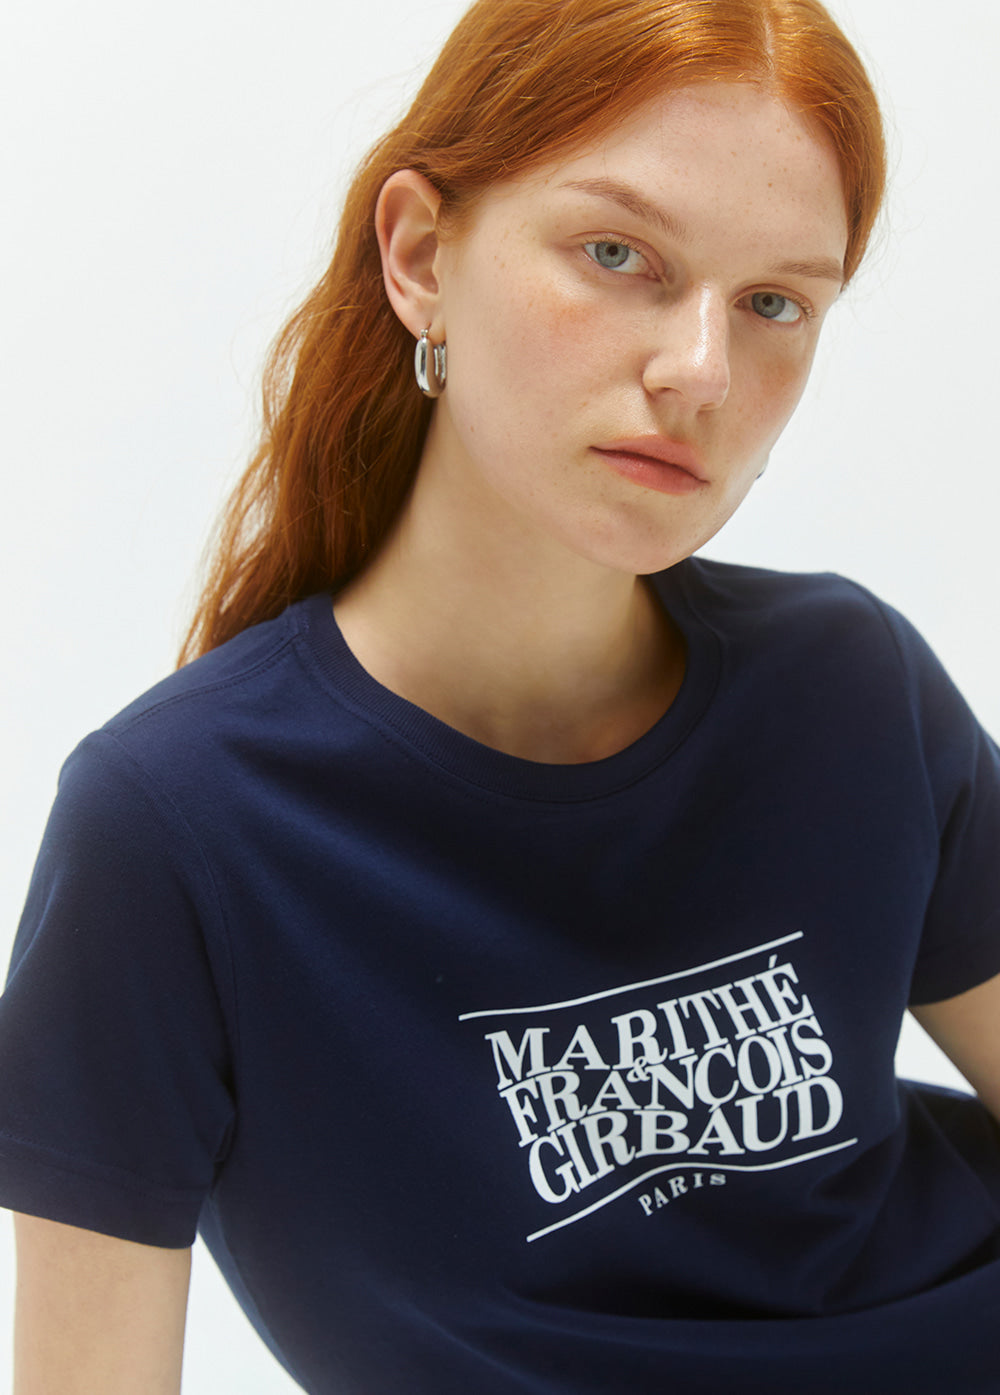 Marithe Francois Girbaud • W Classic Logo Crop Tee